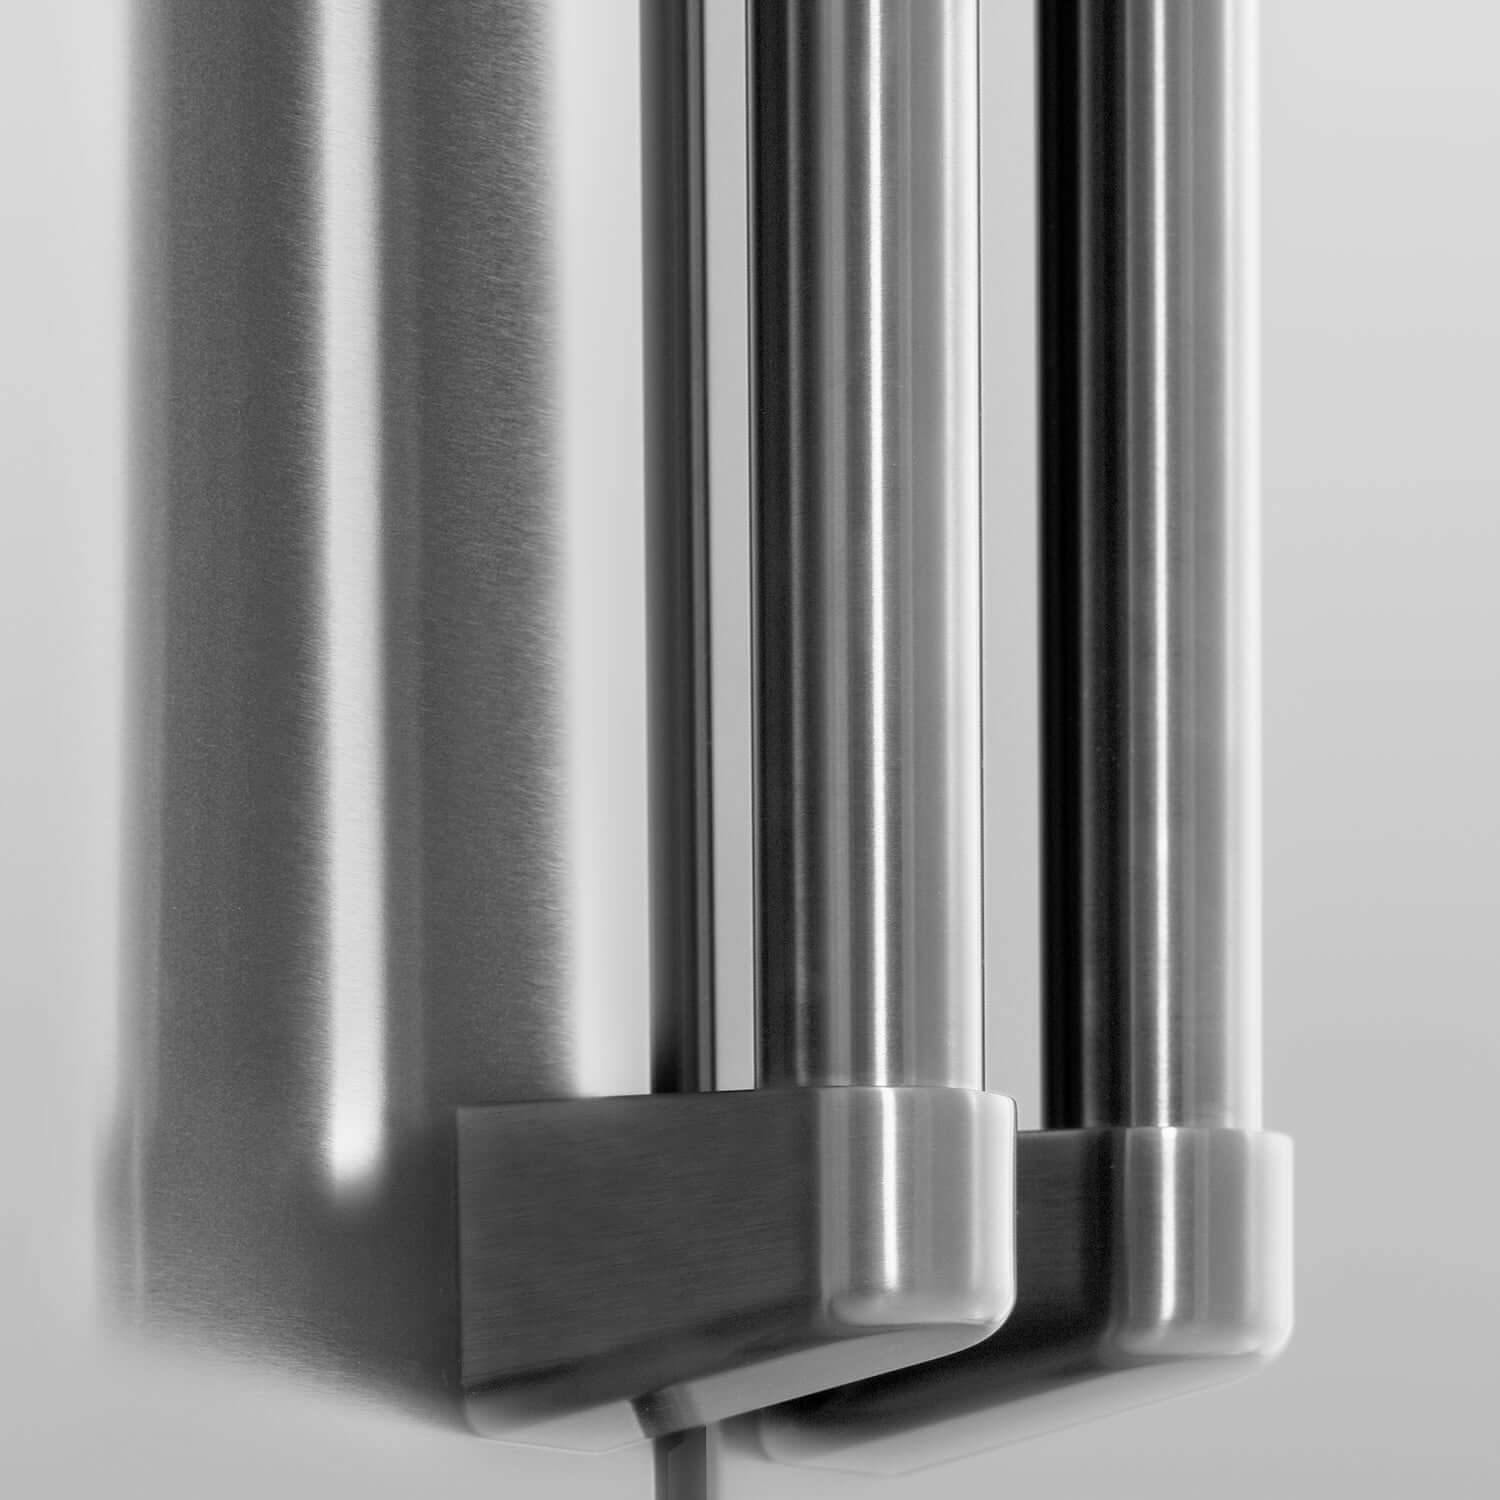 Stainless steel handles on ZLINE 36" French door refrigerator.